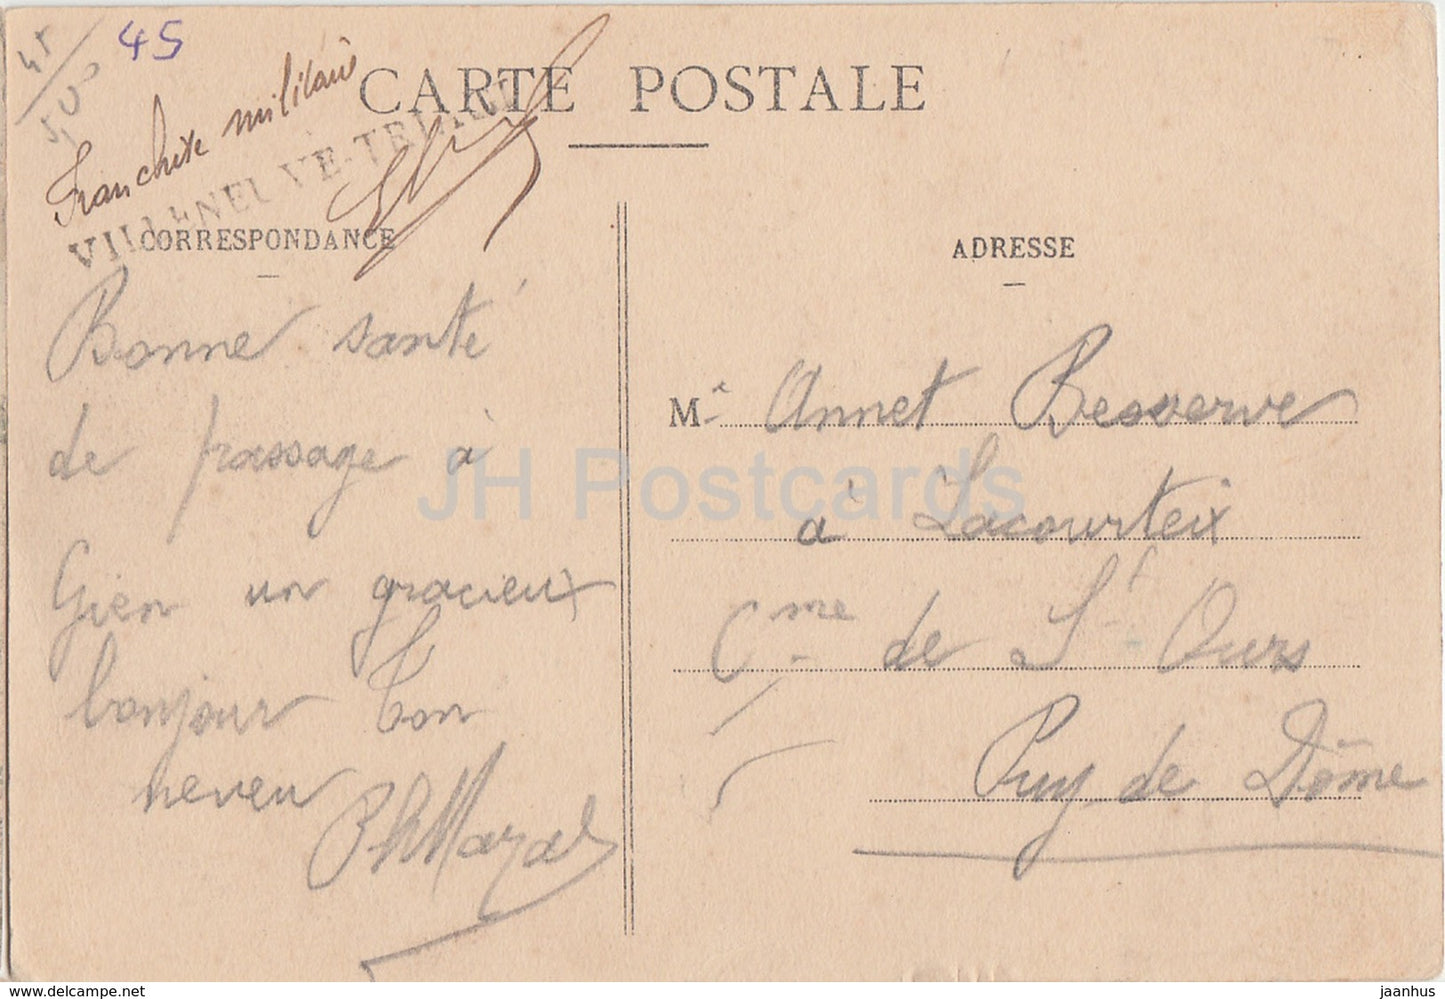 Gien - Le Chateau - castle - 3 - old postcard - France - used